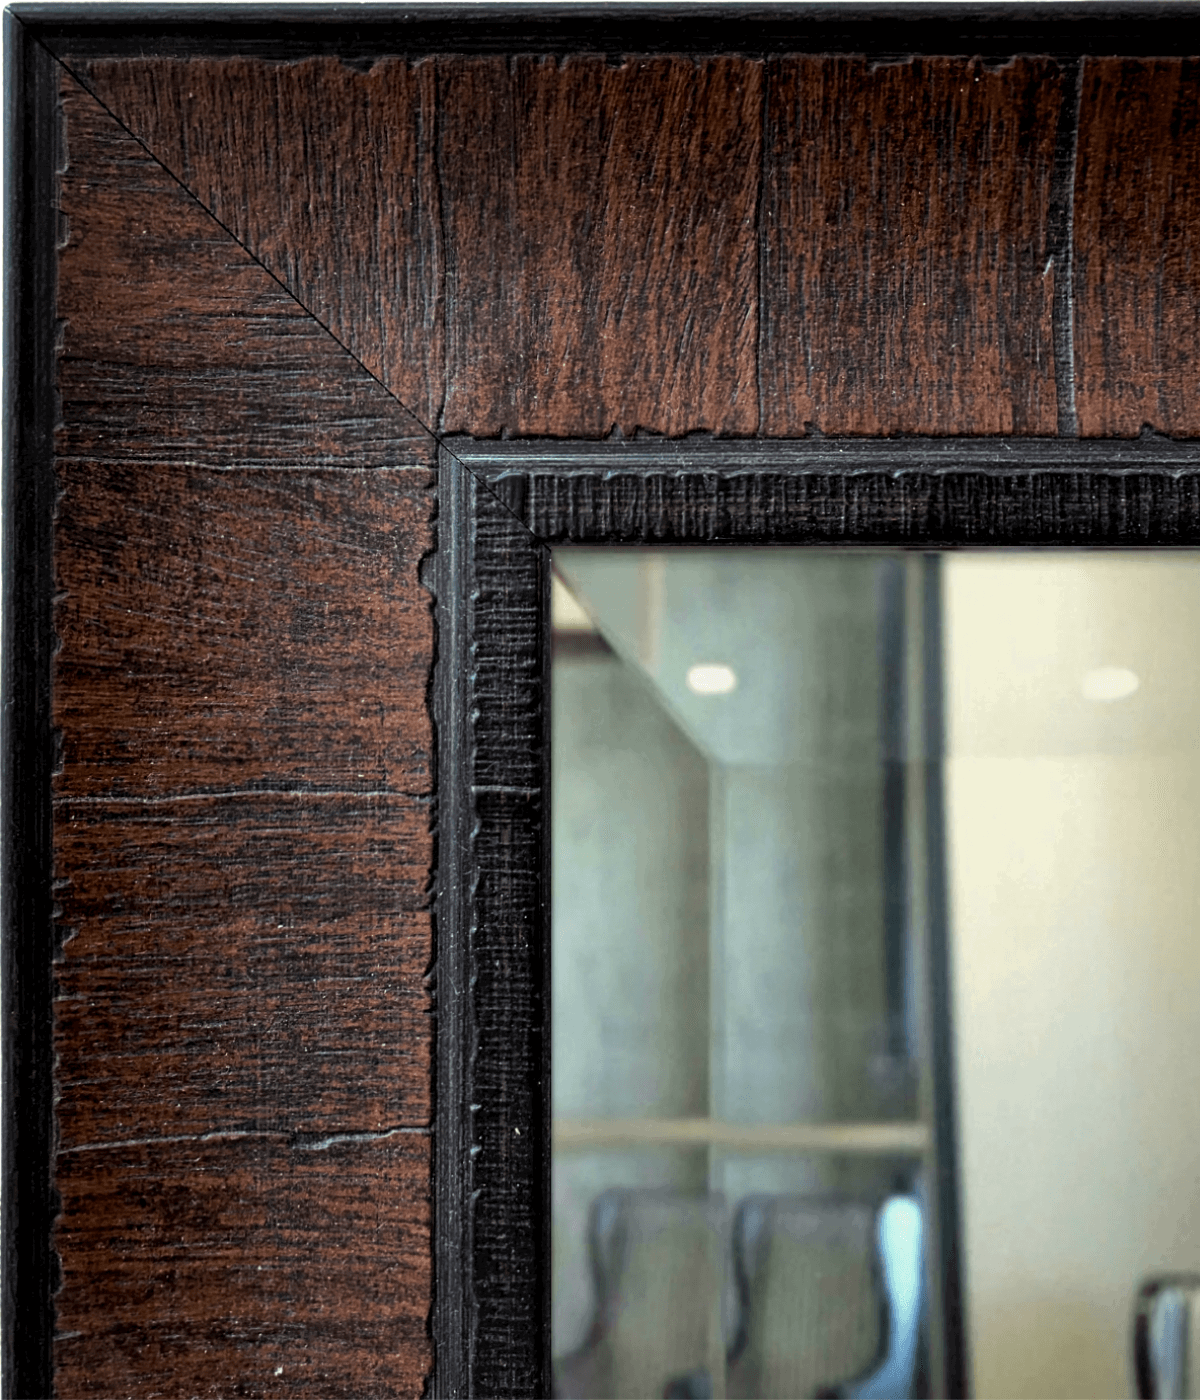 Lodge Rustic Textured Distressed Framed Wall Mirror Dark Walnut Brown - West Frames